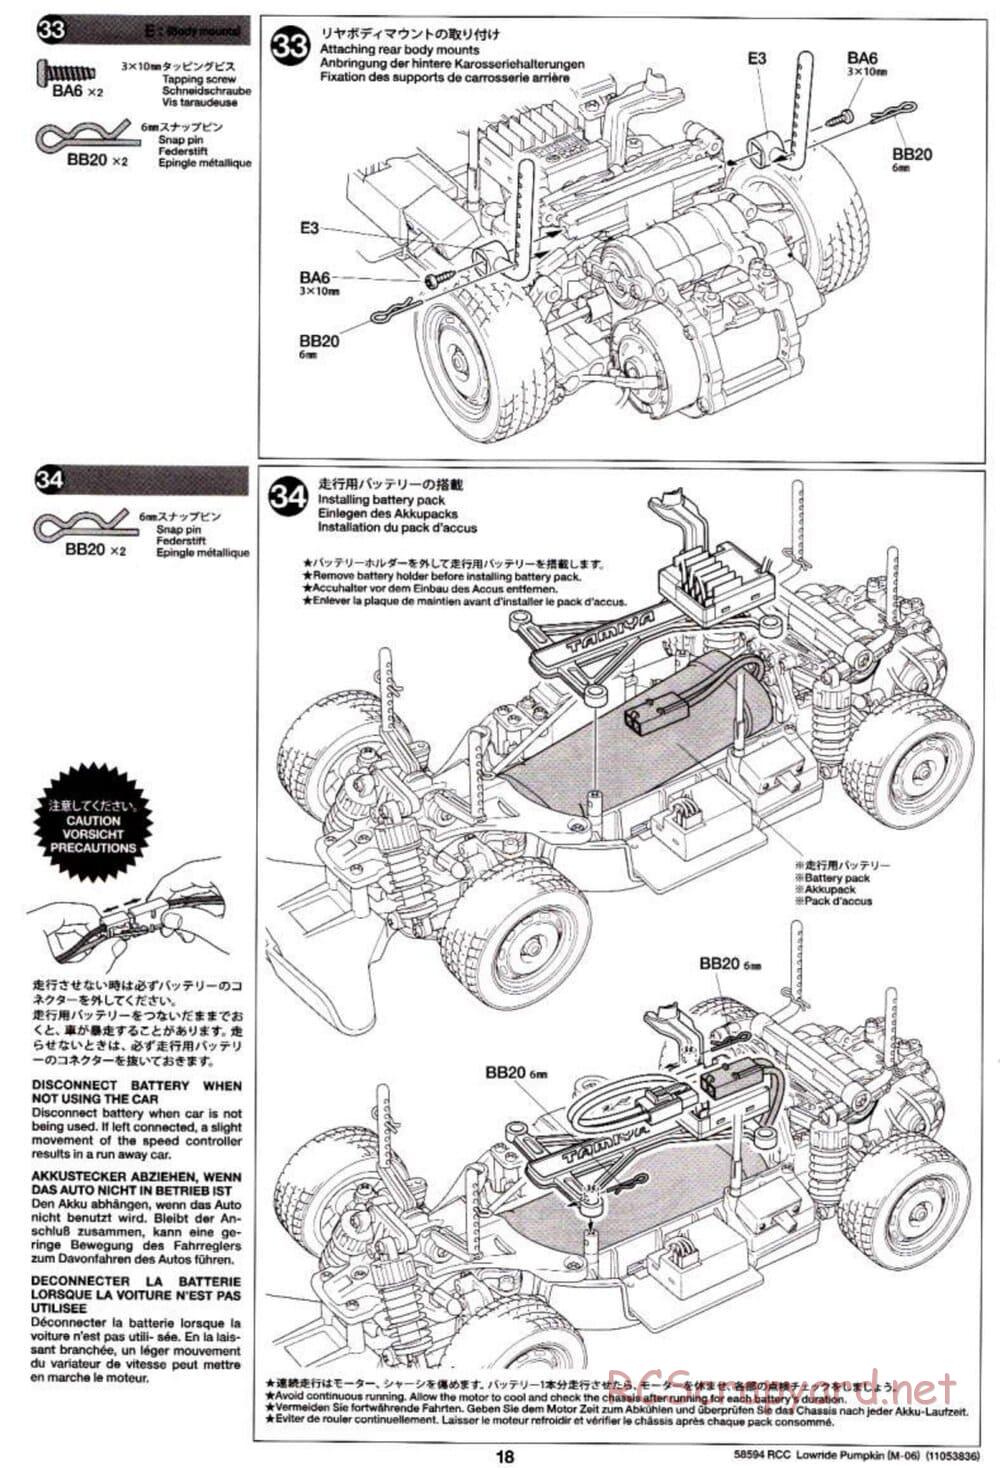 Tamiya - Lowride Pumpkin - M-06 Chassis - Manual - Page 18